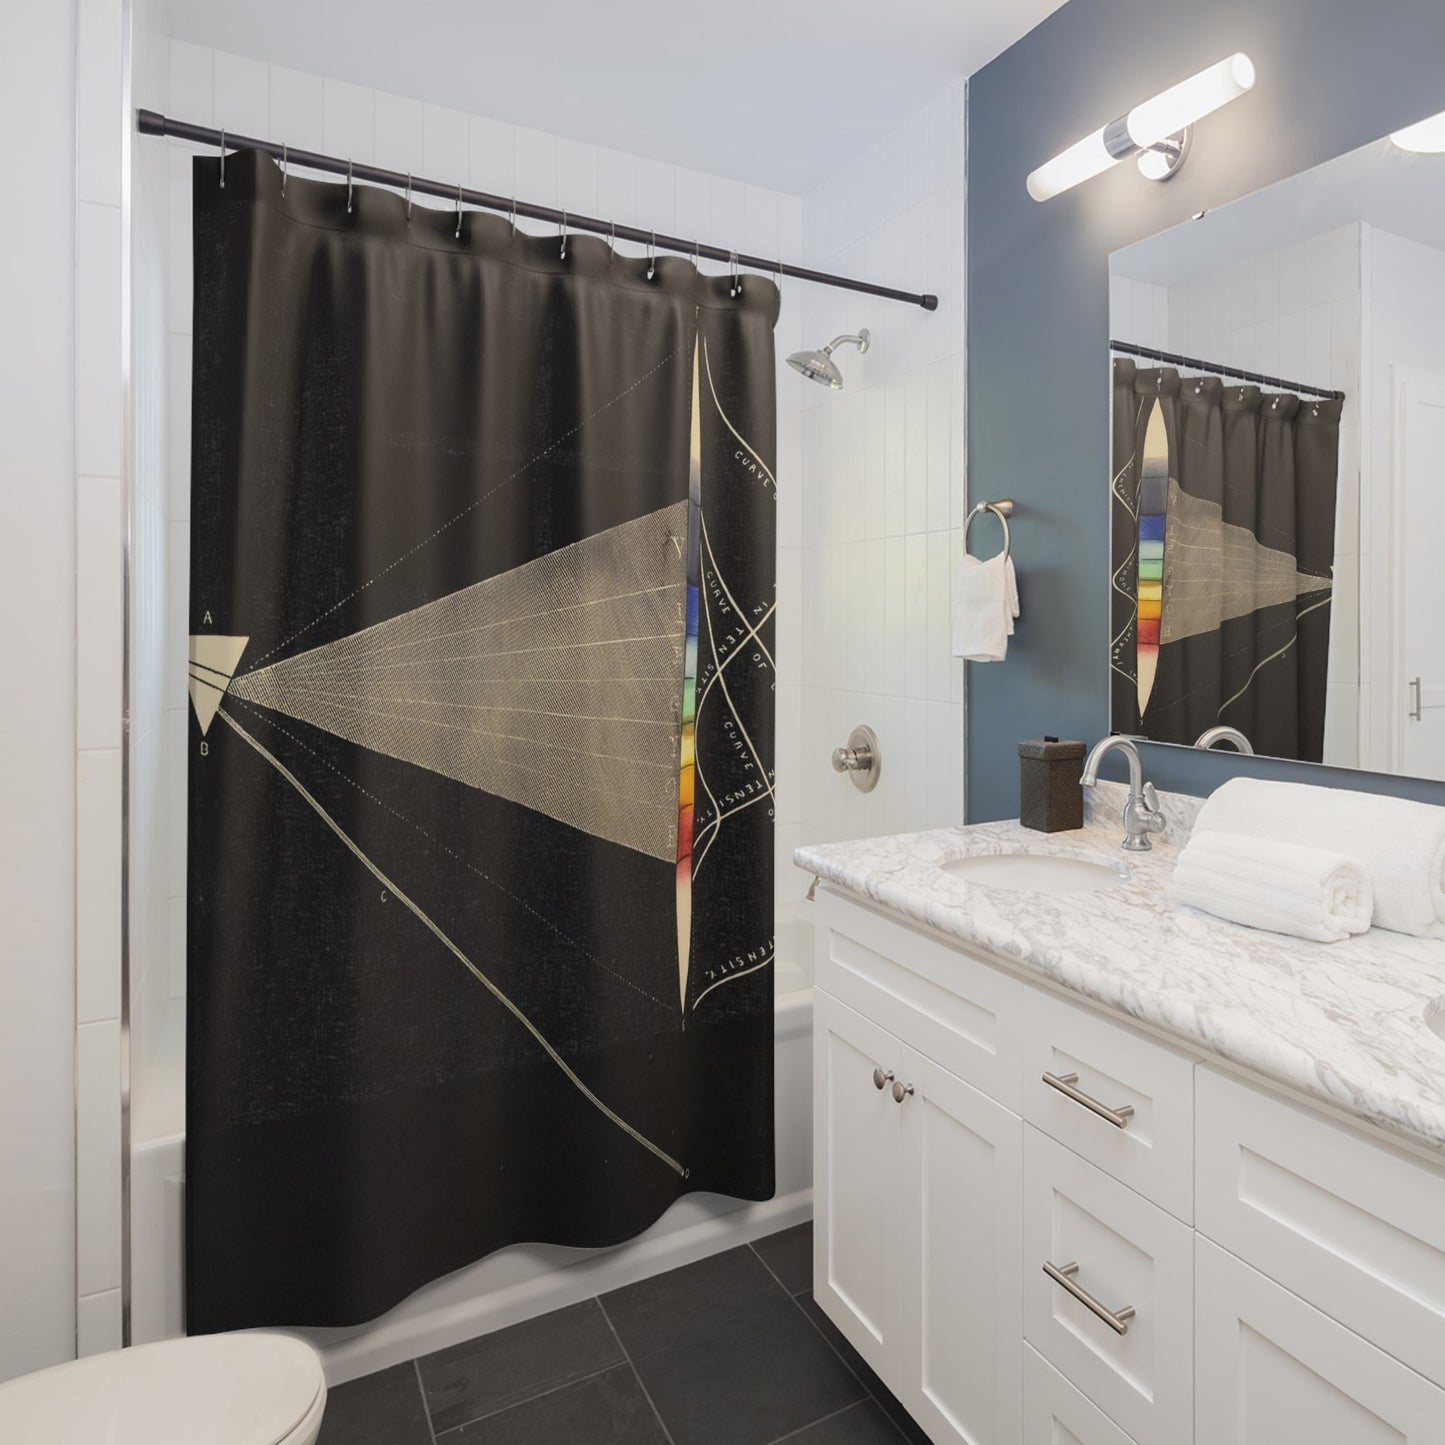 Scientific Shower Curtain Best Bathroom Decorating Ideas for Science Decor